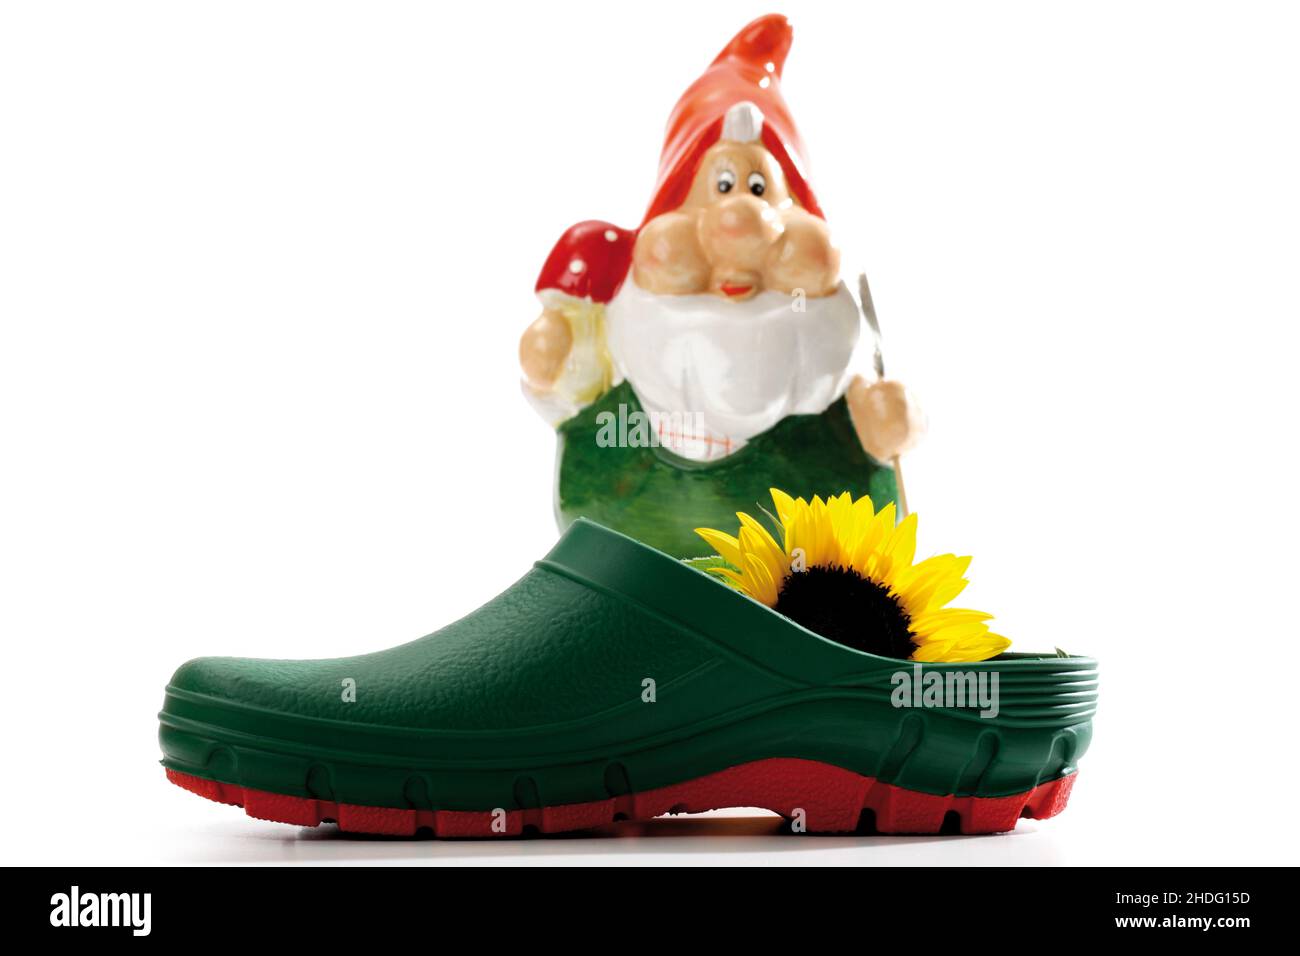 Gnome Shoes